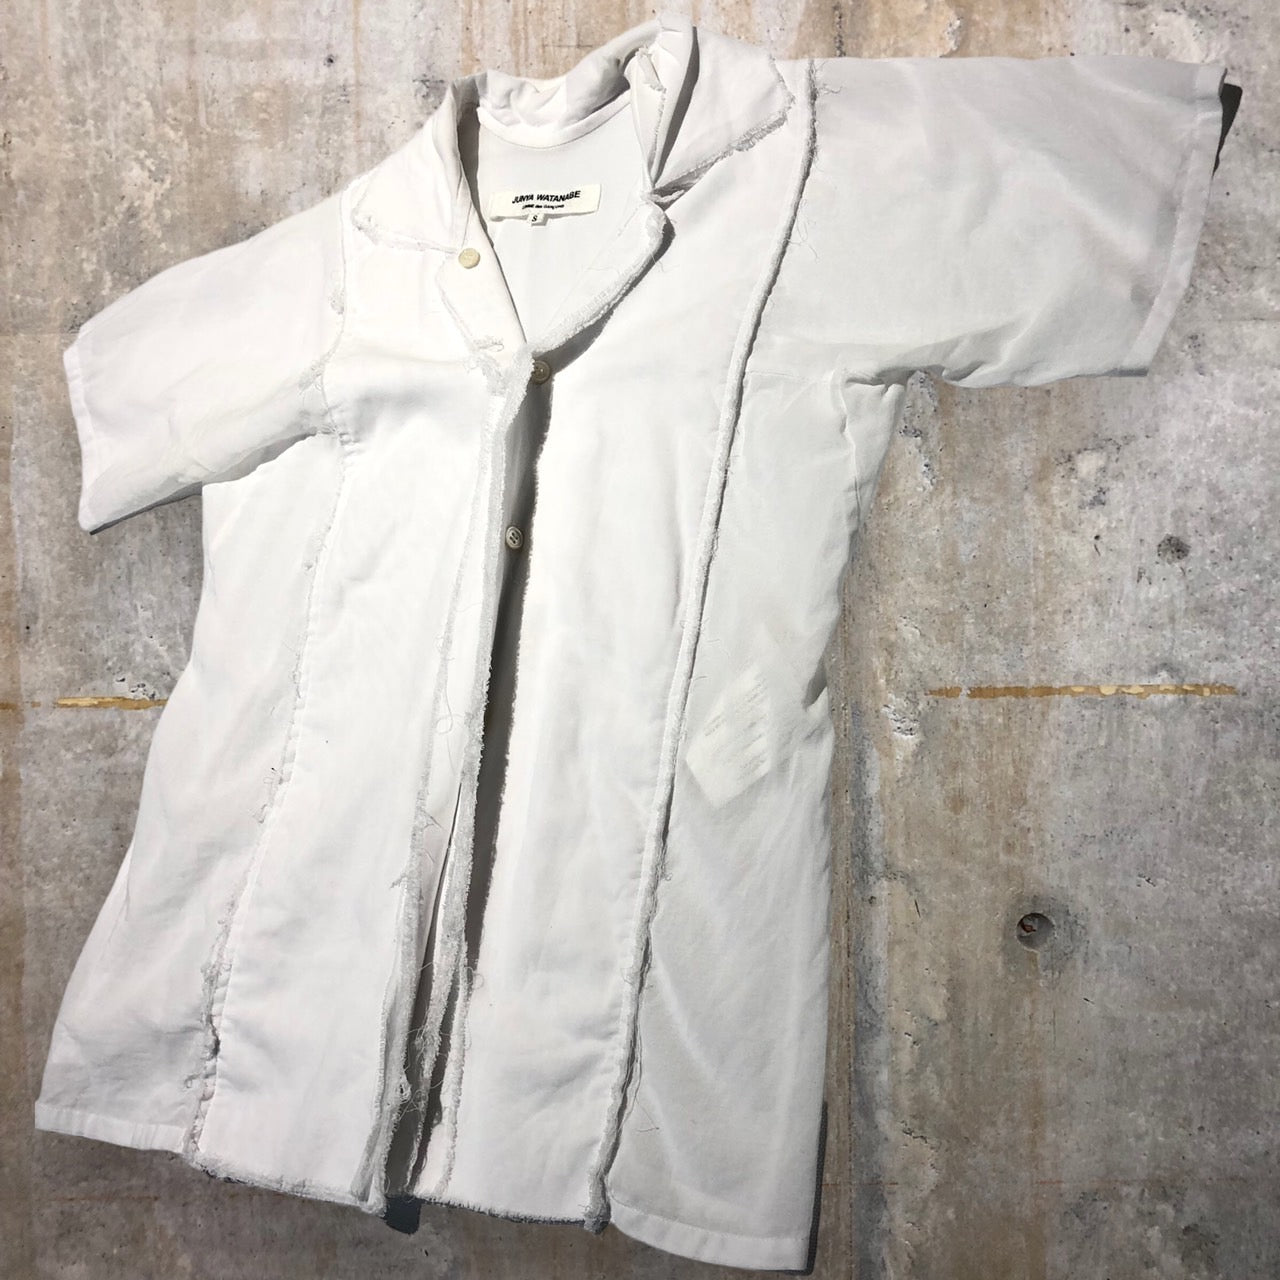 COMME des GARCONS JUNYA WATANABE(コムデギャルソンジュンヤワタナベ) switching layered short sleeve shirt/半袖シャツ JO-B090 S ホワイト AD2005